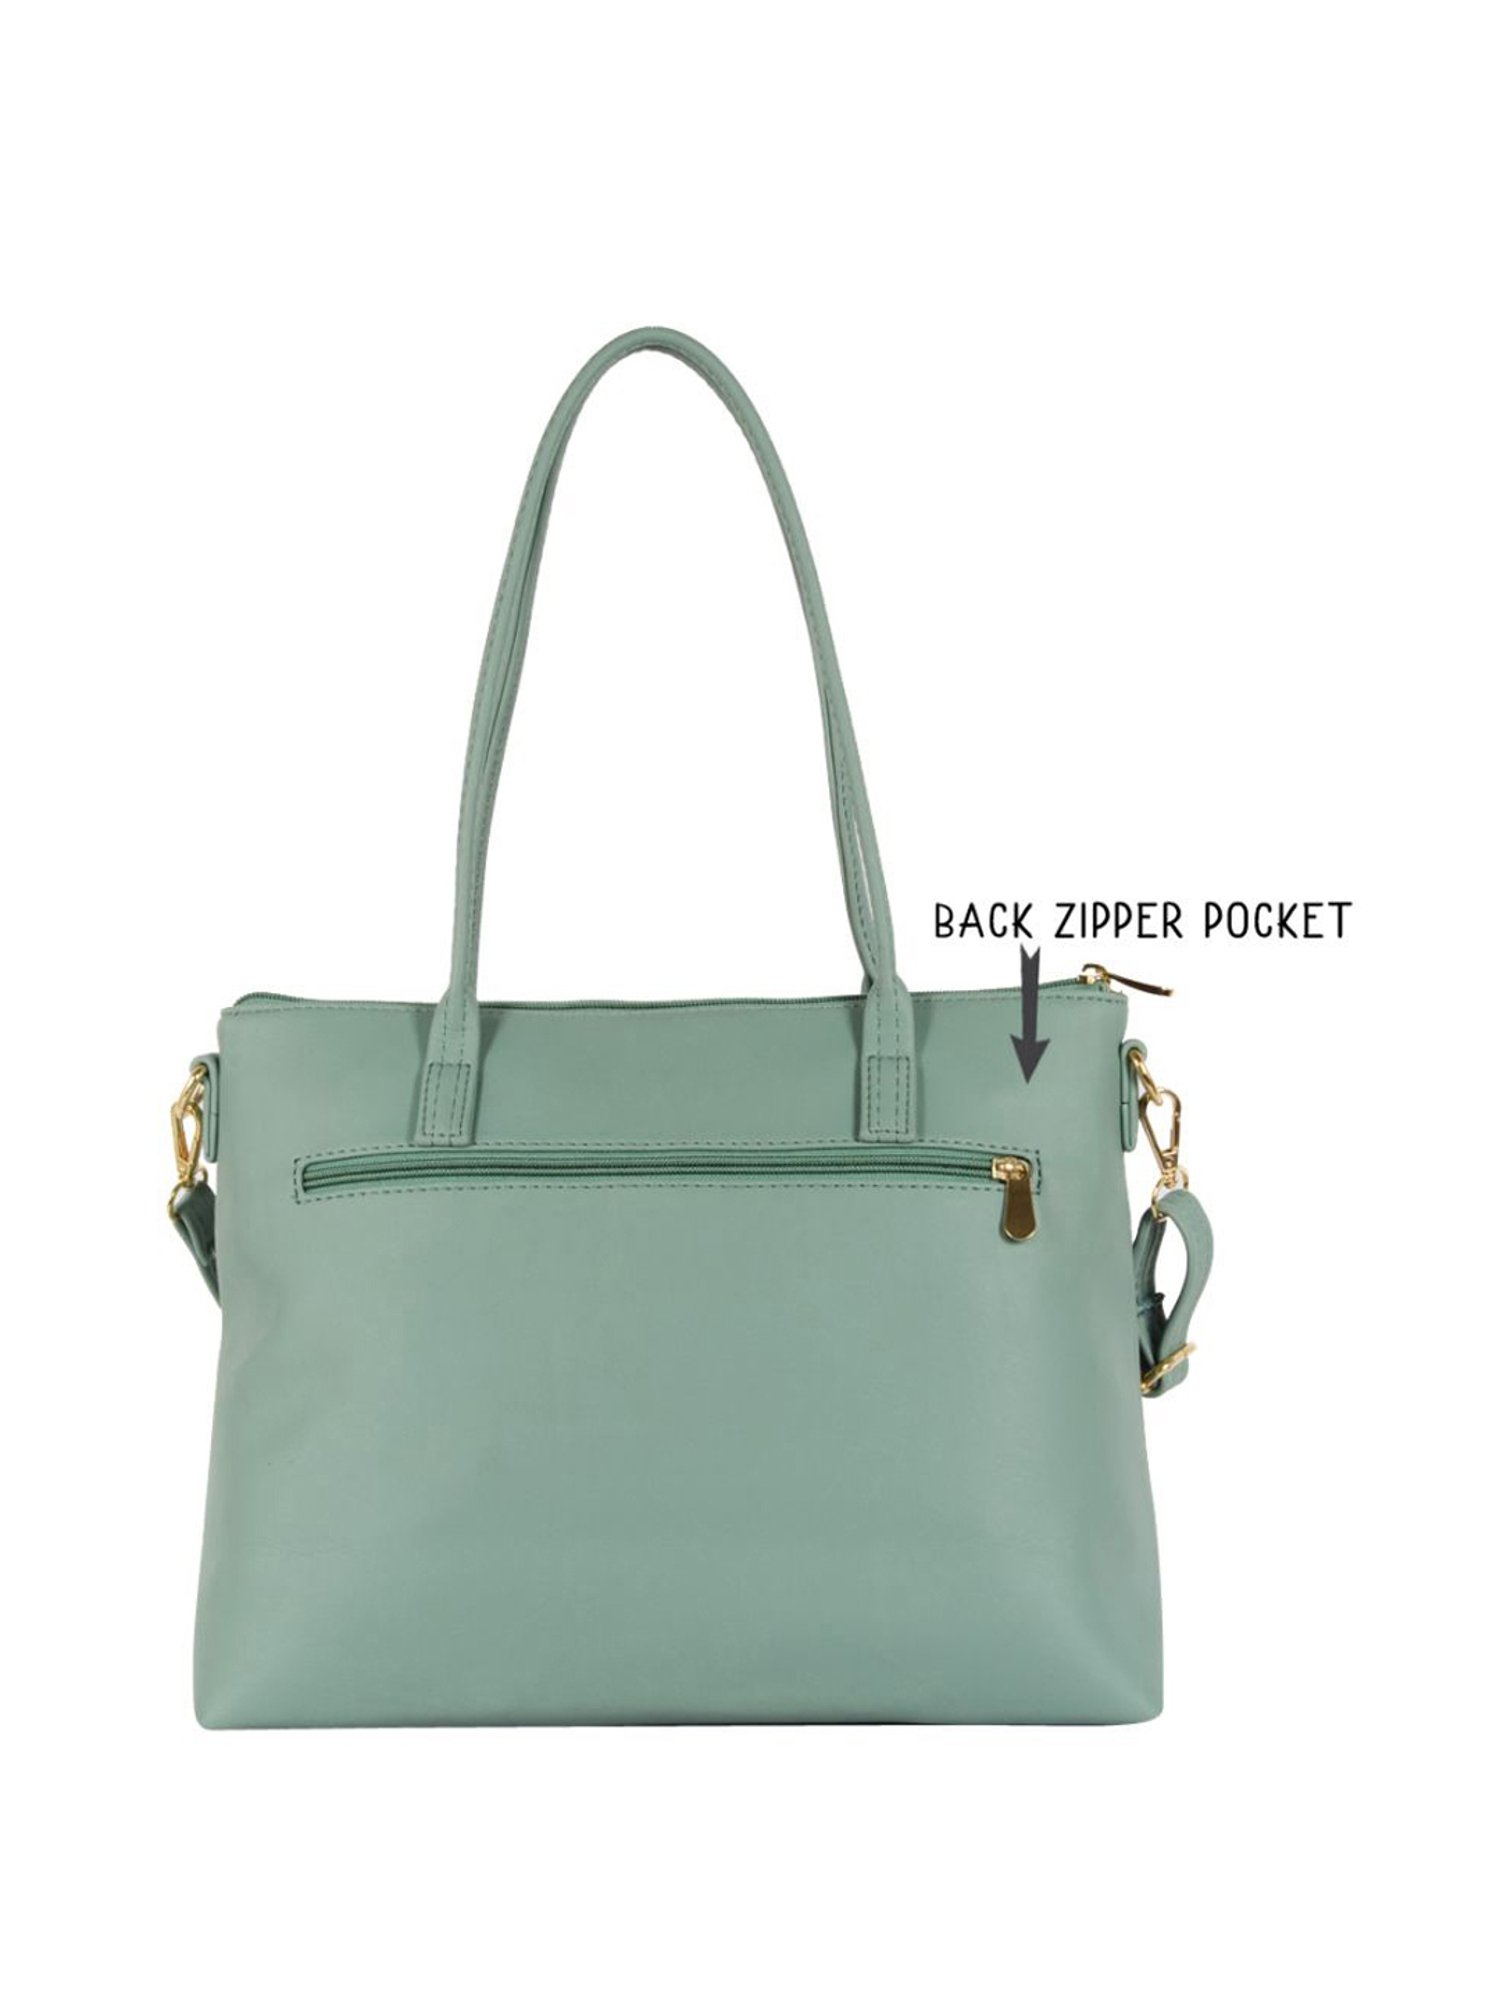 light green mini prada purse  Mint green aesthetic, Bags, Purses